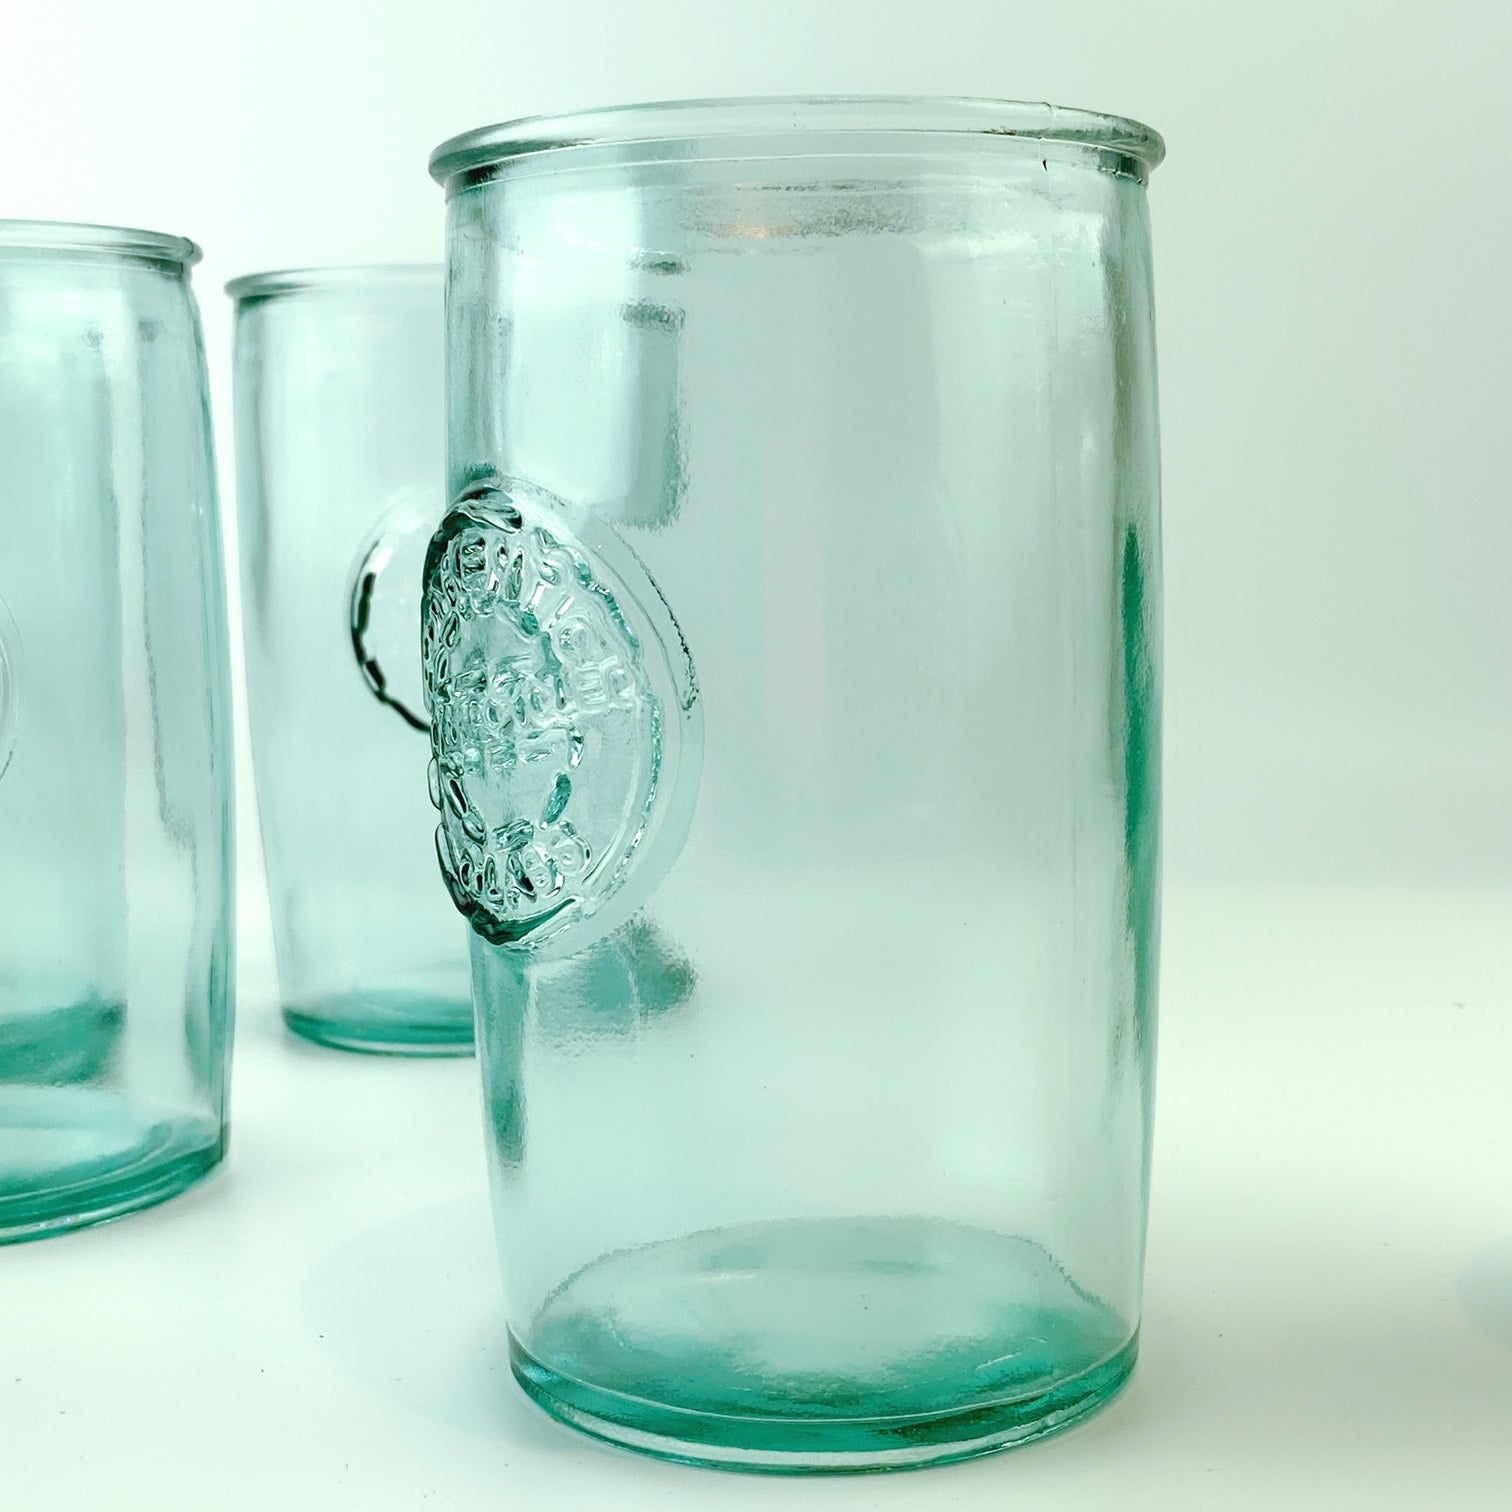 Authentic 100 Percent Recycled Glass San Miguel Tumbler Cup Set of 3 Light  Aqua